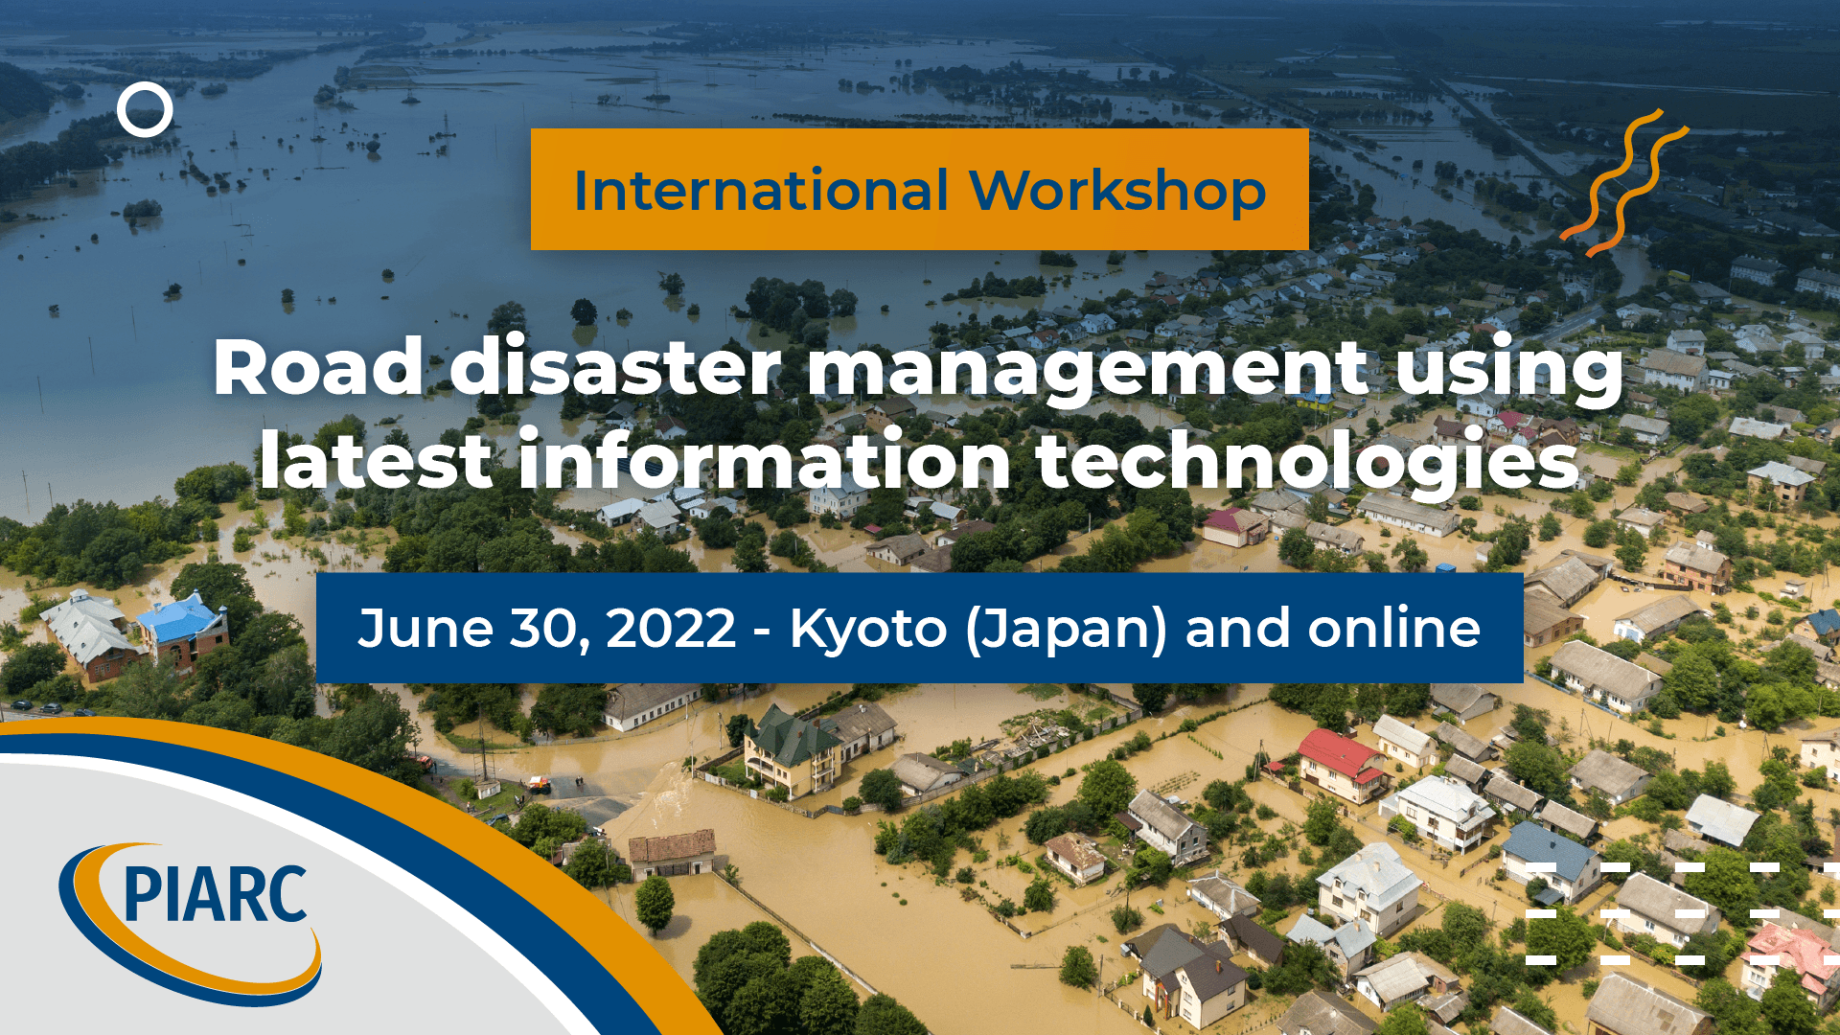 International-Workshop-Road-disaster-management-June-30-Japan-PIARC-2022